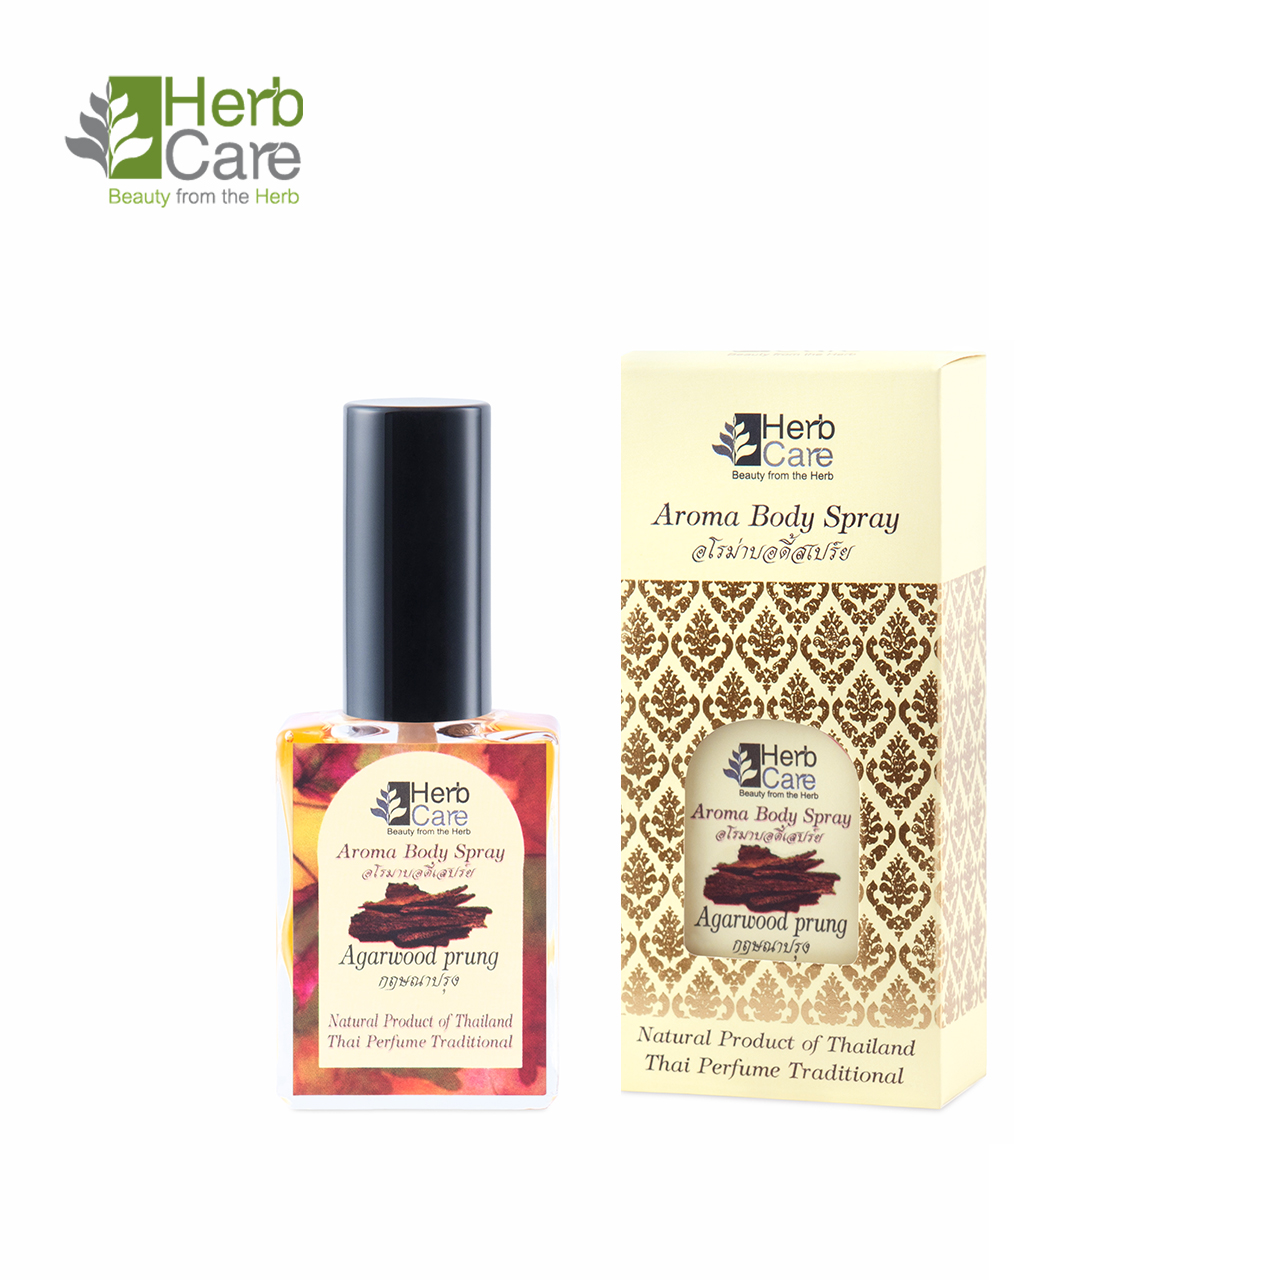 Agarwood Prung : Aroma Body Perfume